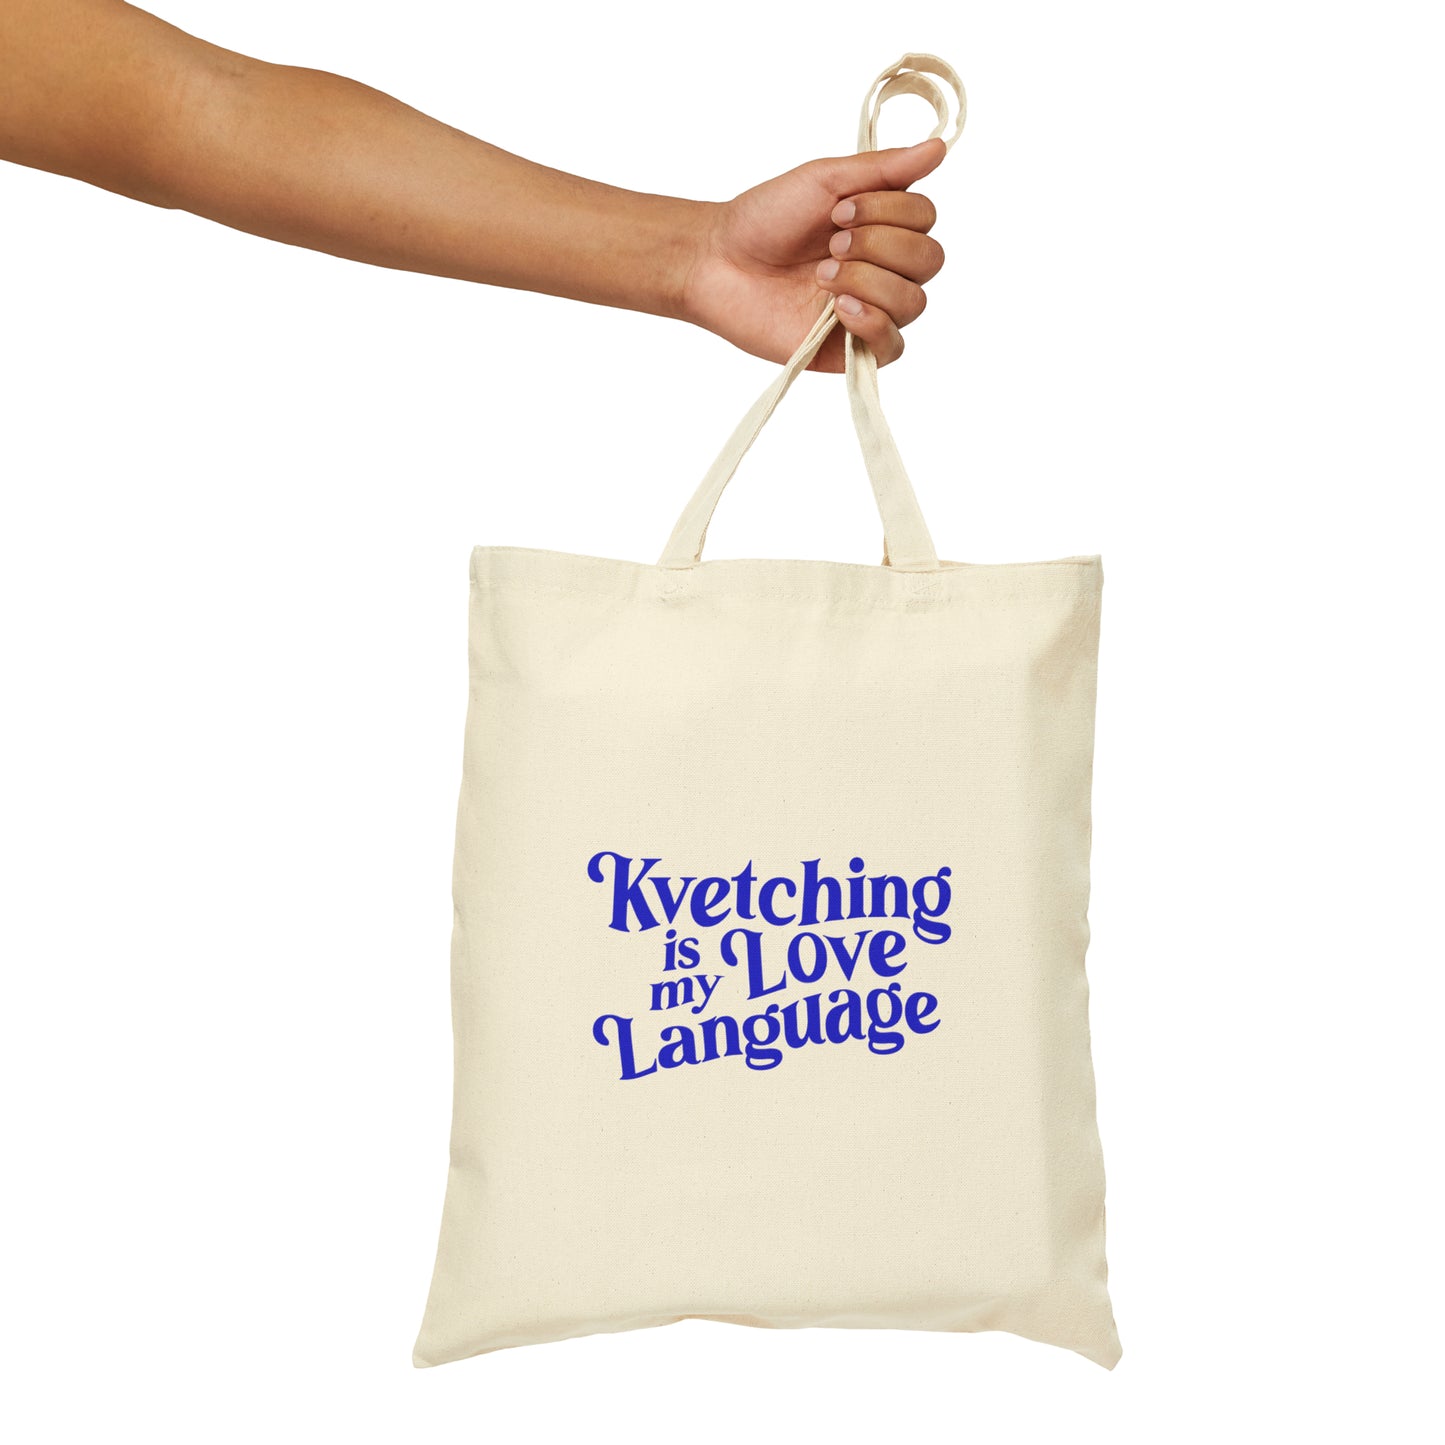 Kvetching is my Love Language Tote